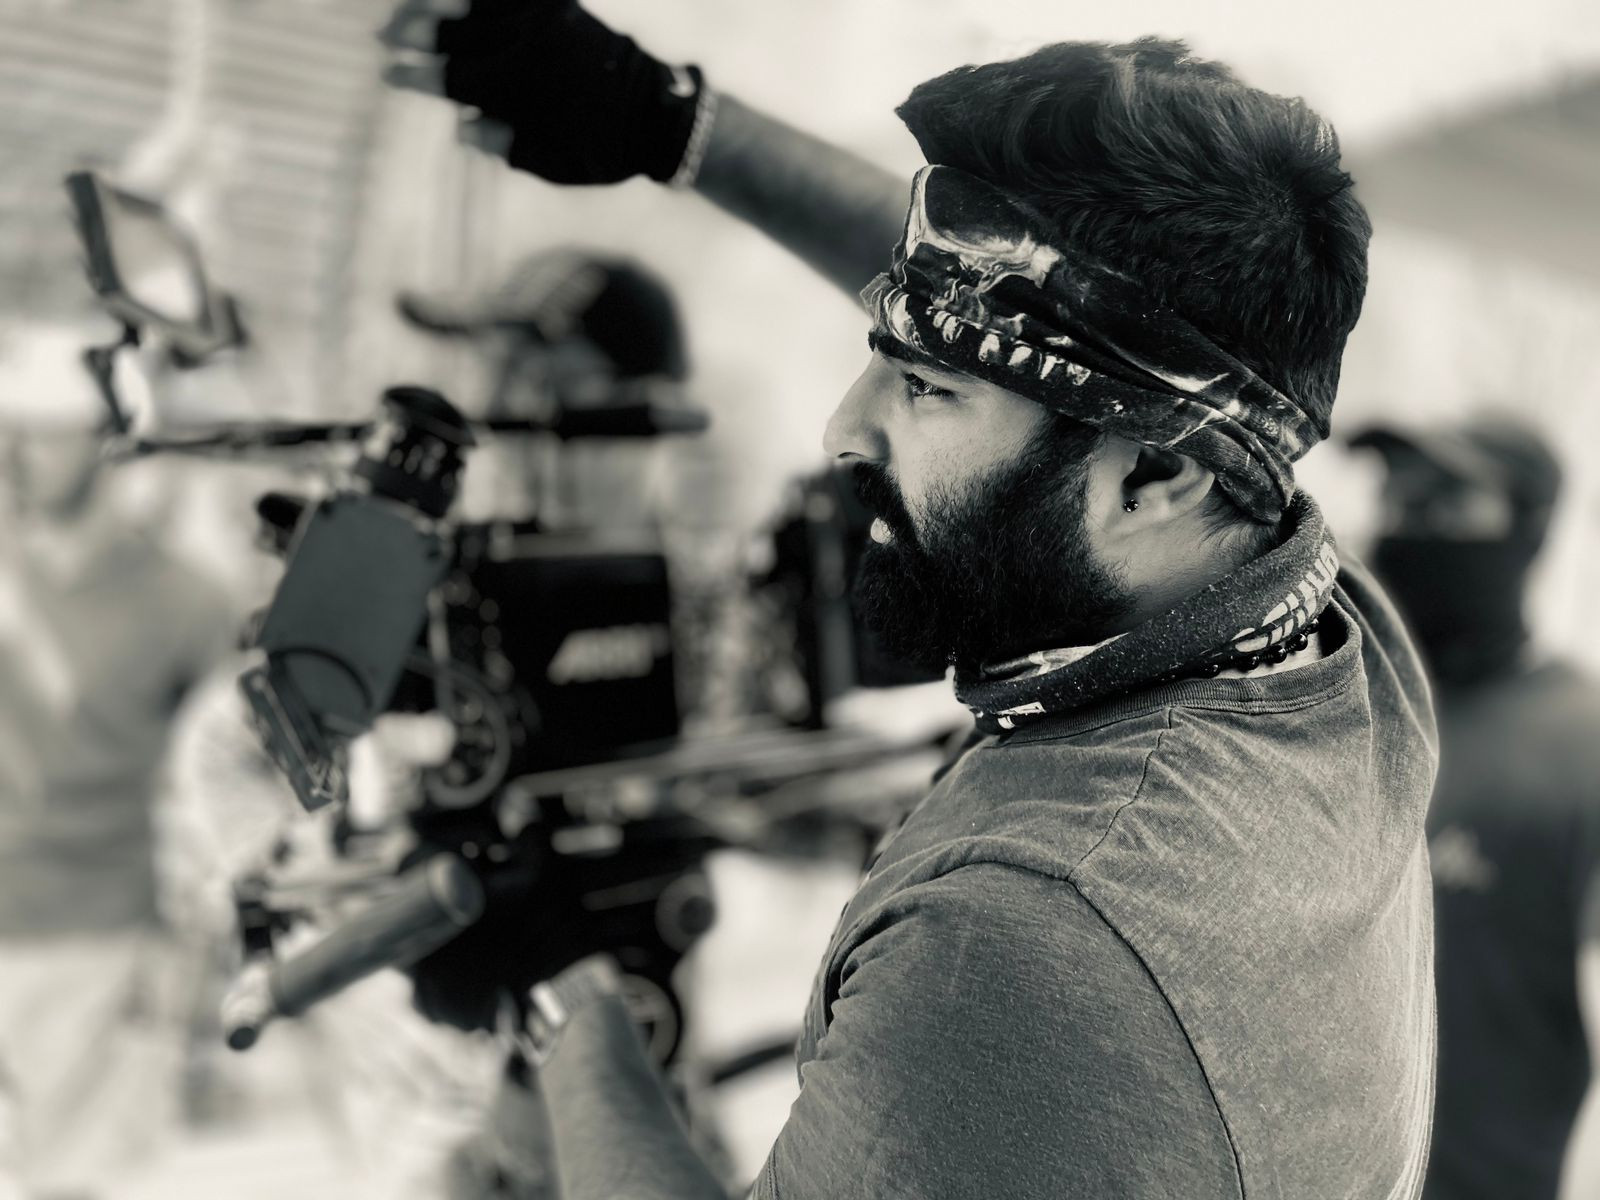 cinematographer ahsan raza during a shoot in karachi photo via ahsan raza